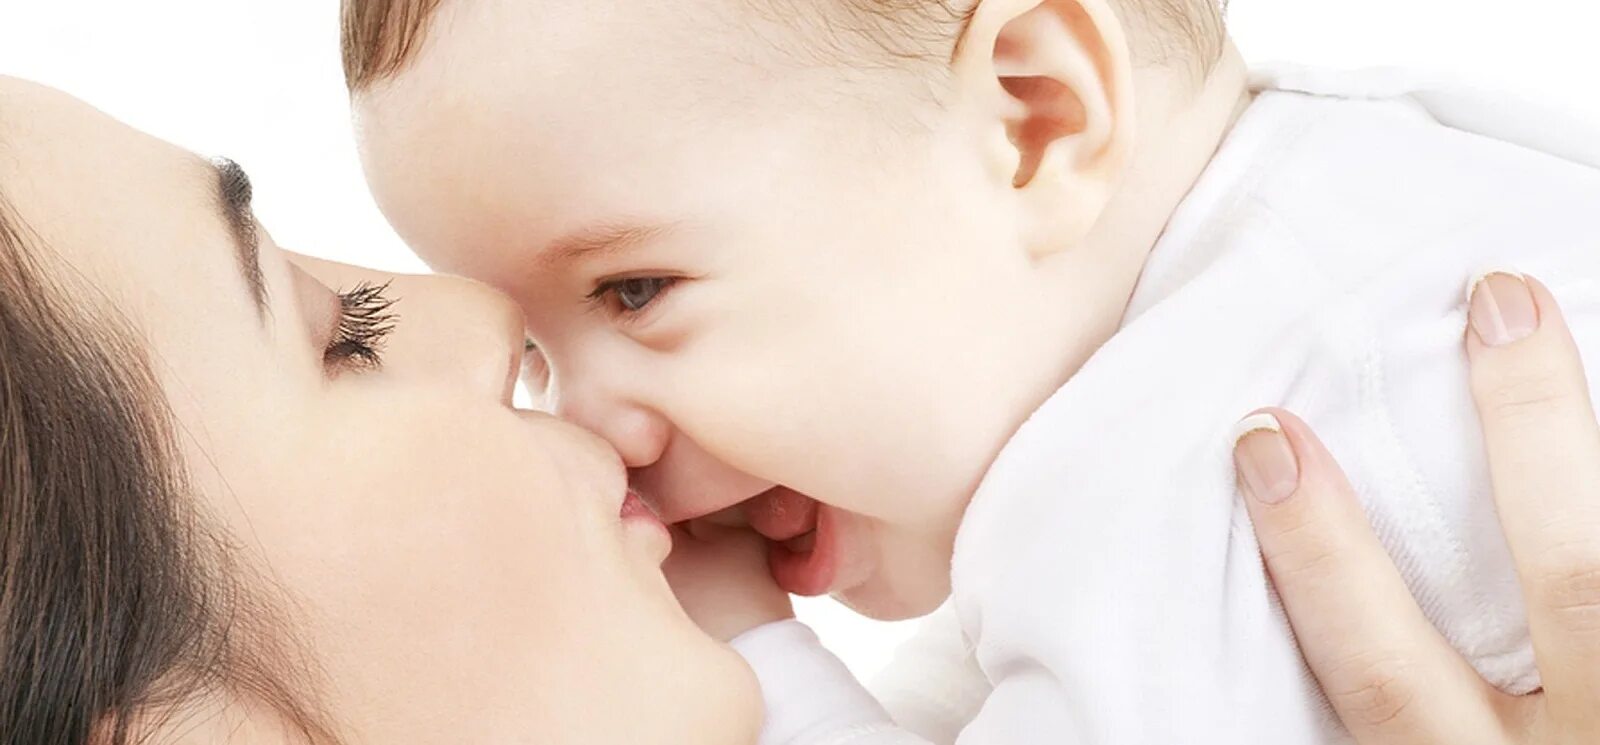 Мать с ребенком. Мама целует малыша. Ребенок целует. Женщина целует ребенка. Ковид мамы